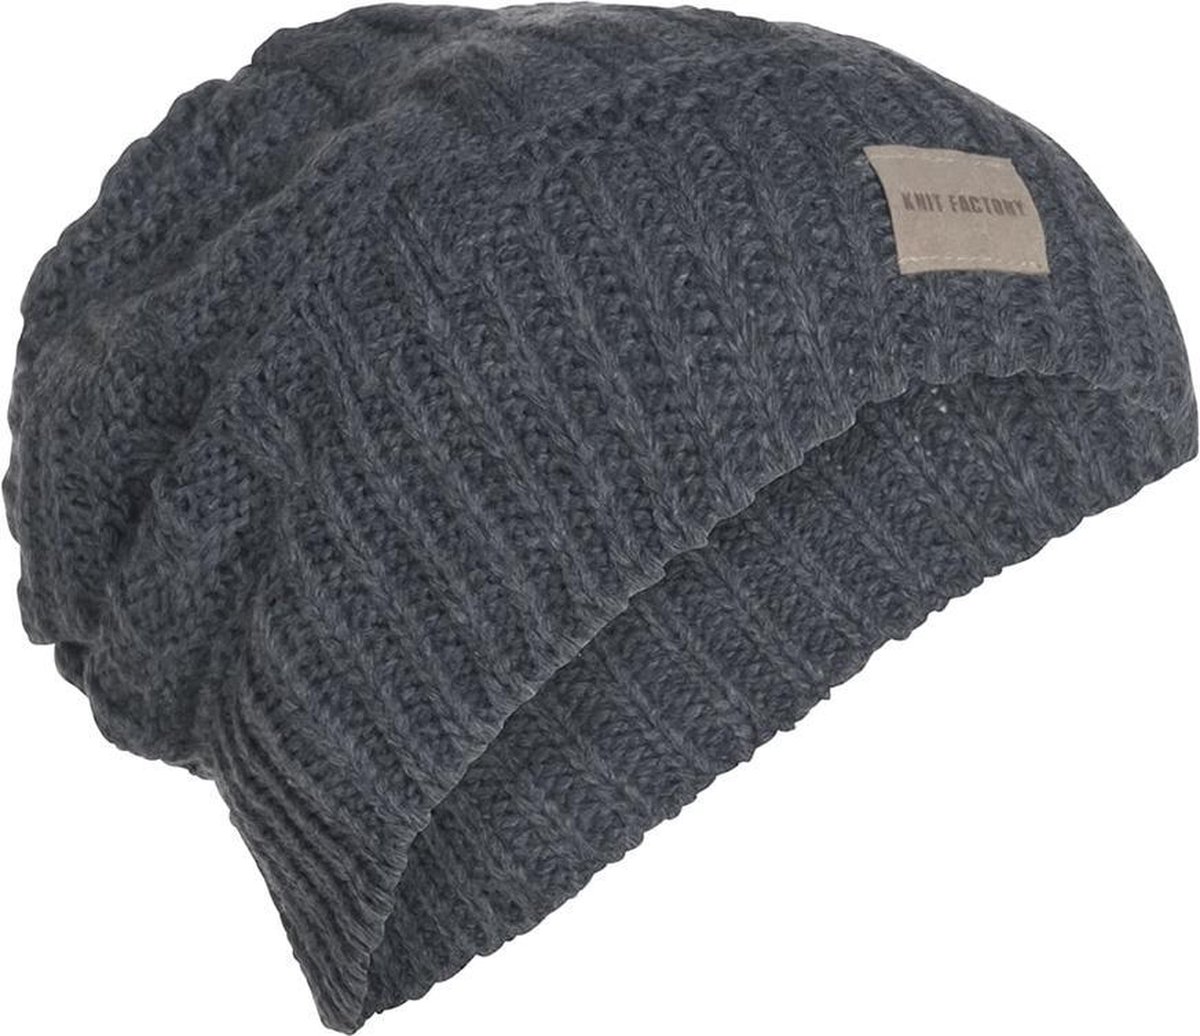 Knit Factory Bobby Gebreide Muts Heren & Dames - Sloppy Beanie hat - Antraciet - Warme donkergrijze Wintermuts - Unisex - One Size